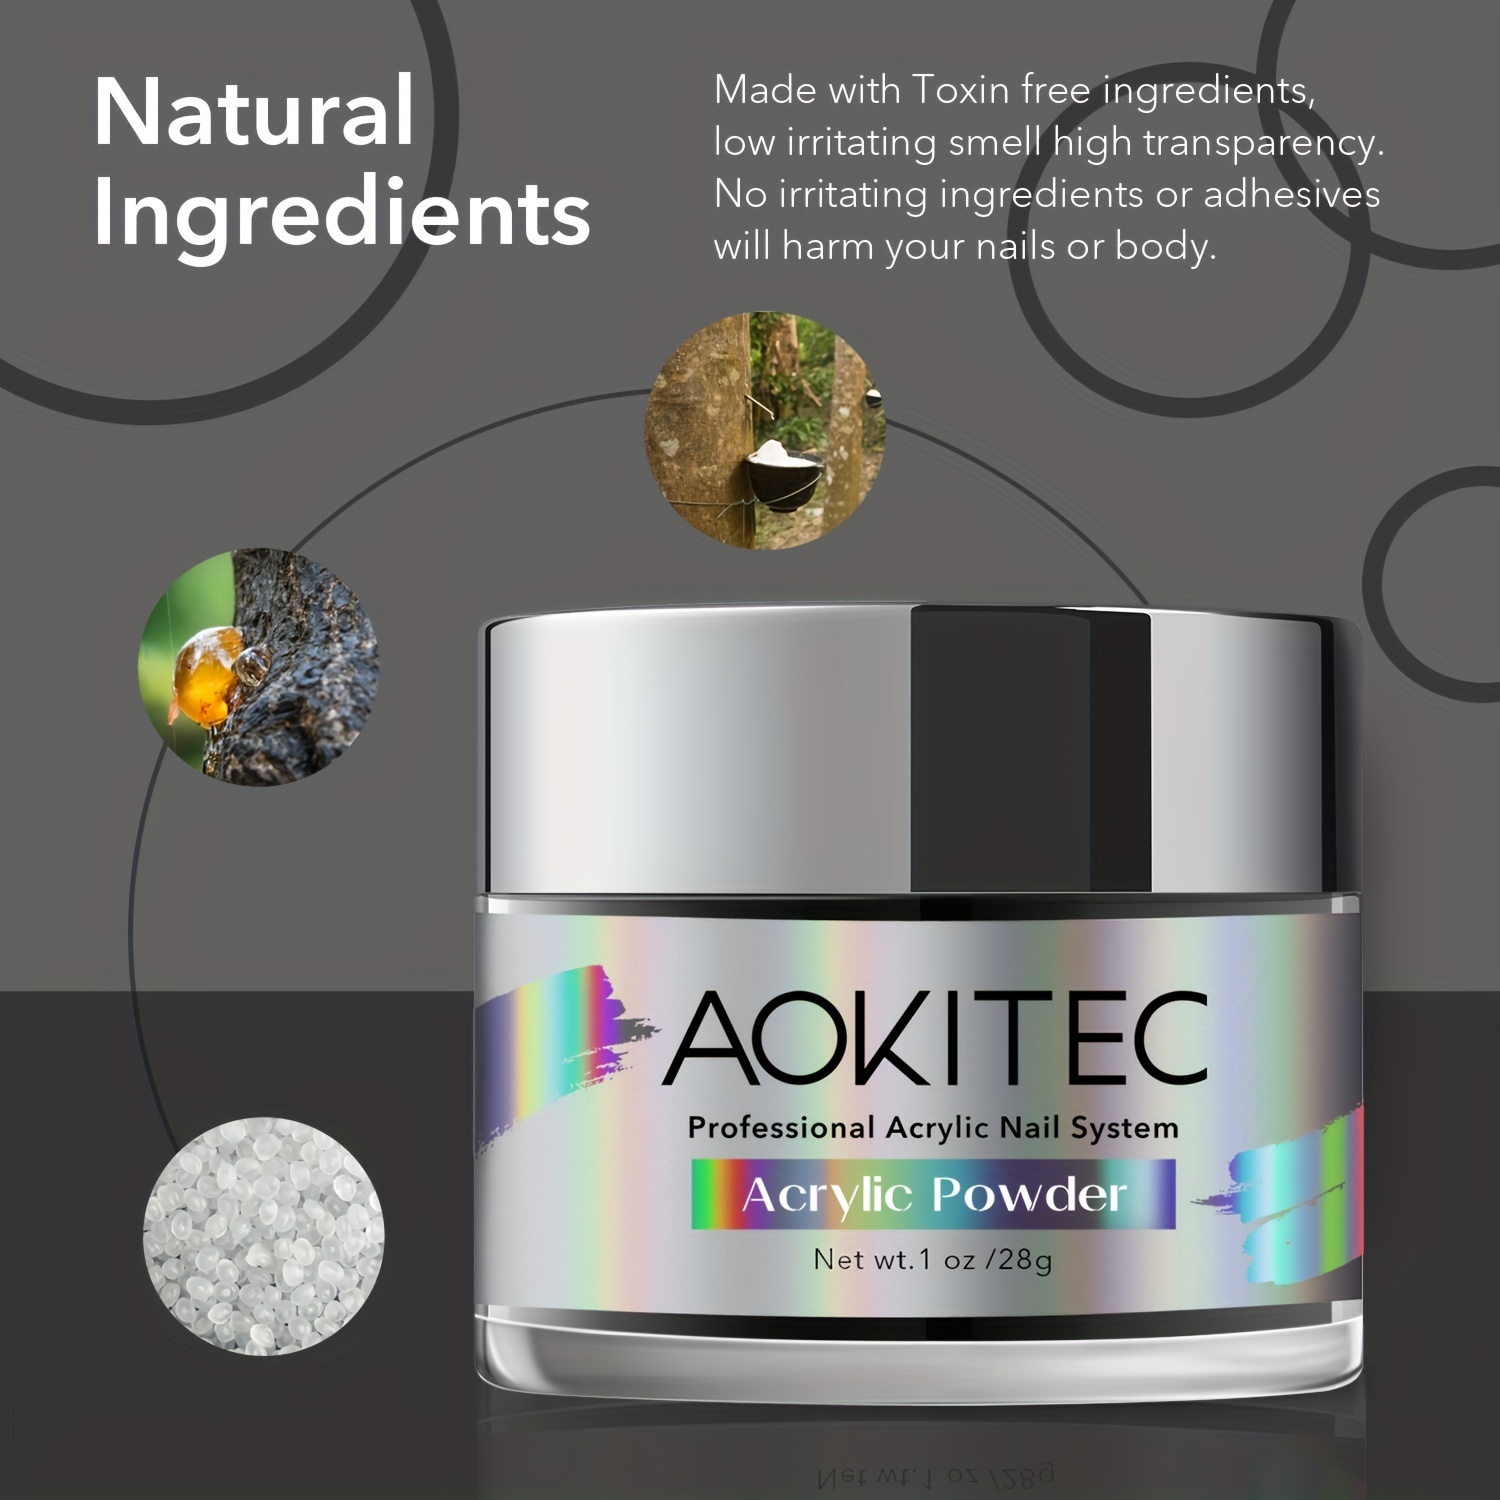 Aokitec Red Acrylic Powder for Nails, Professional Acrylic Nail Powder,Lasting Acrylic Powder for Extension French Nail Art, Acrylic Nail Supplies